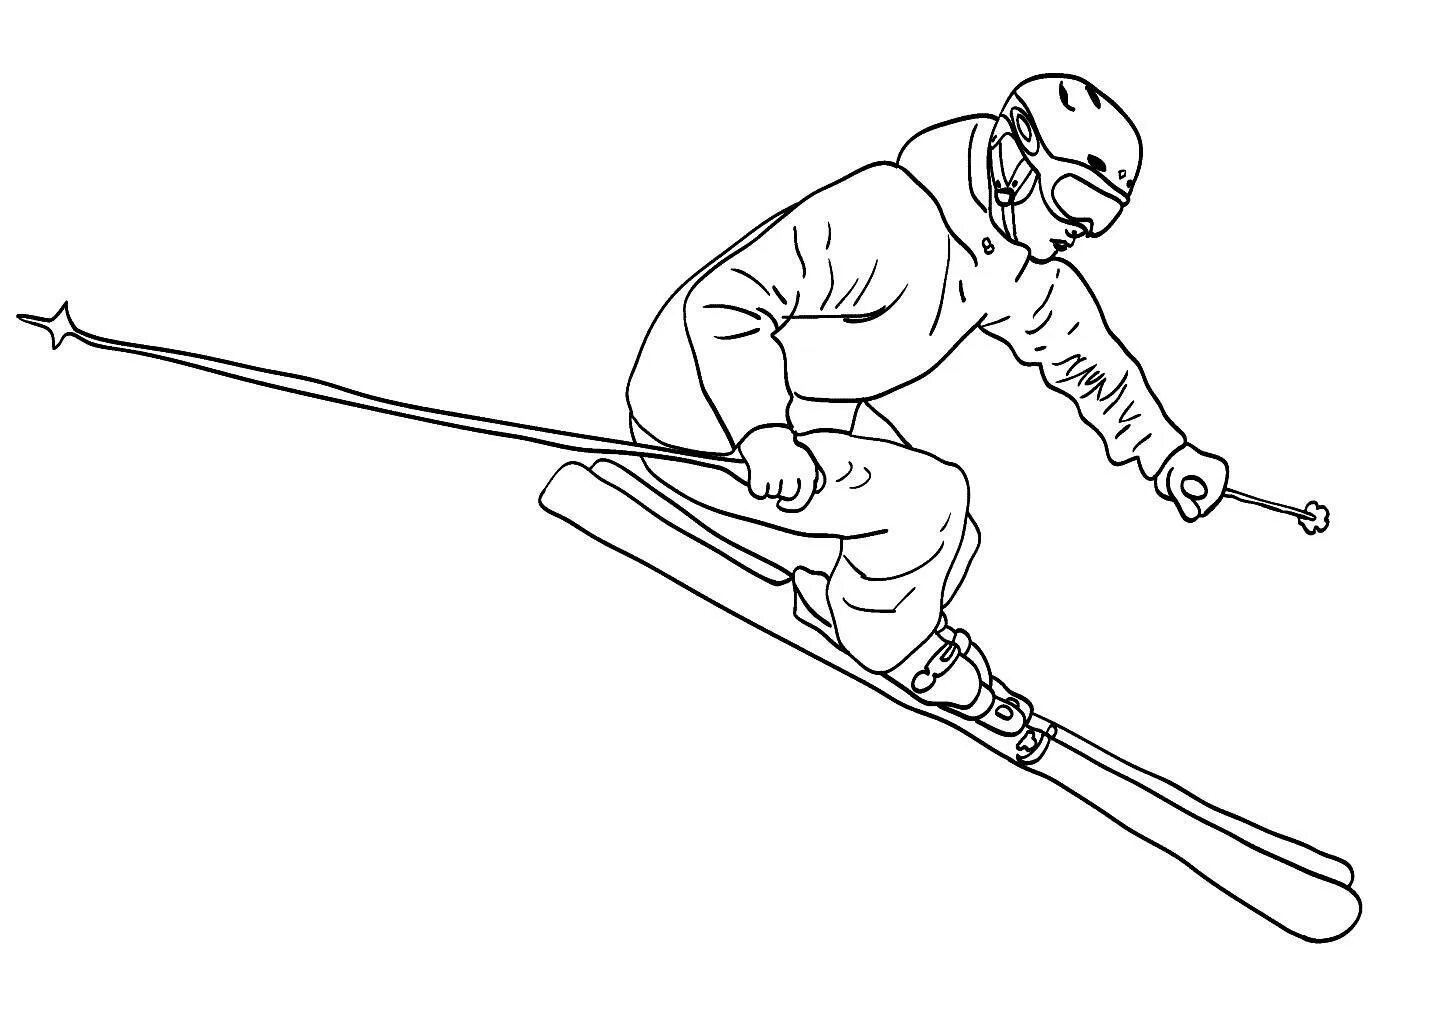 Skiing #6